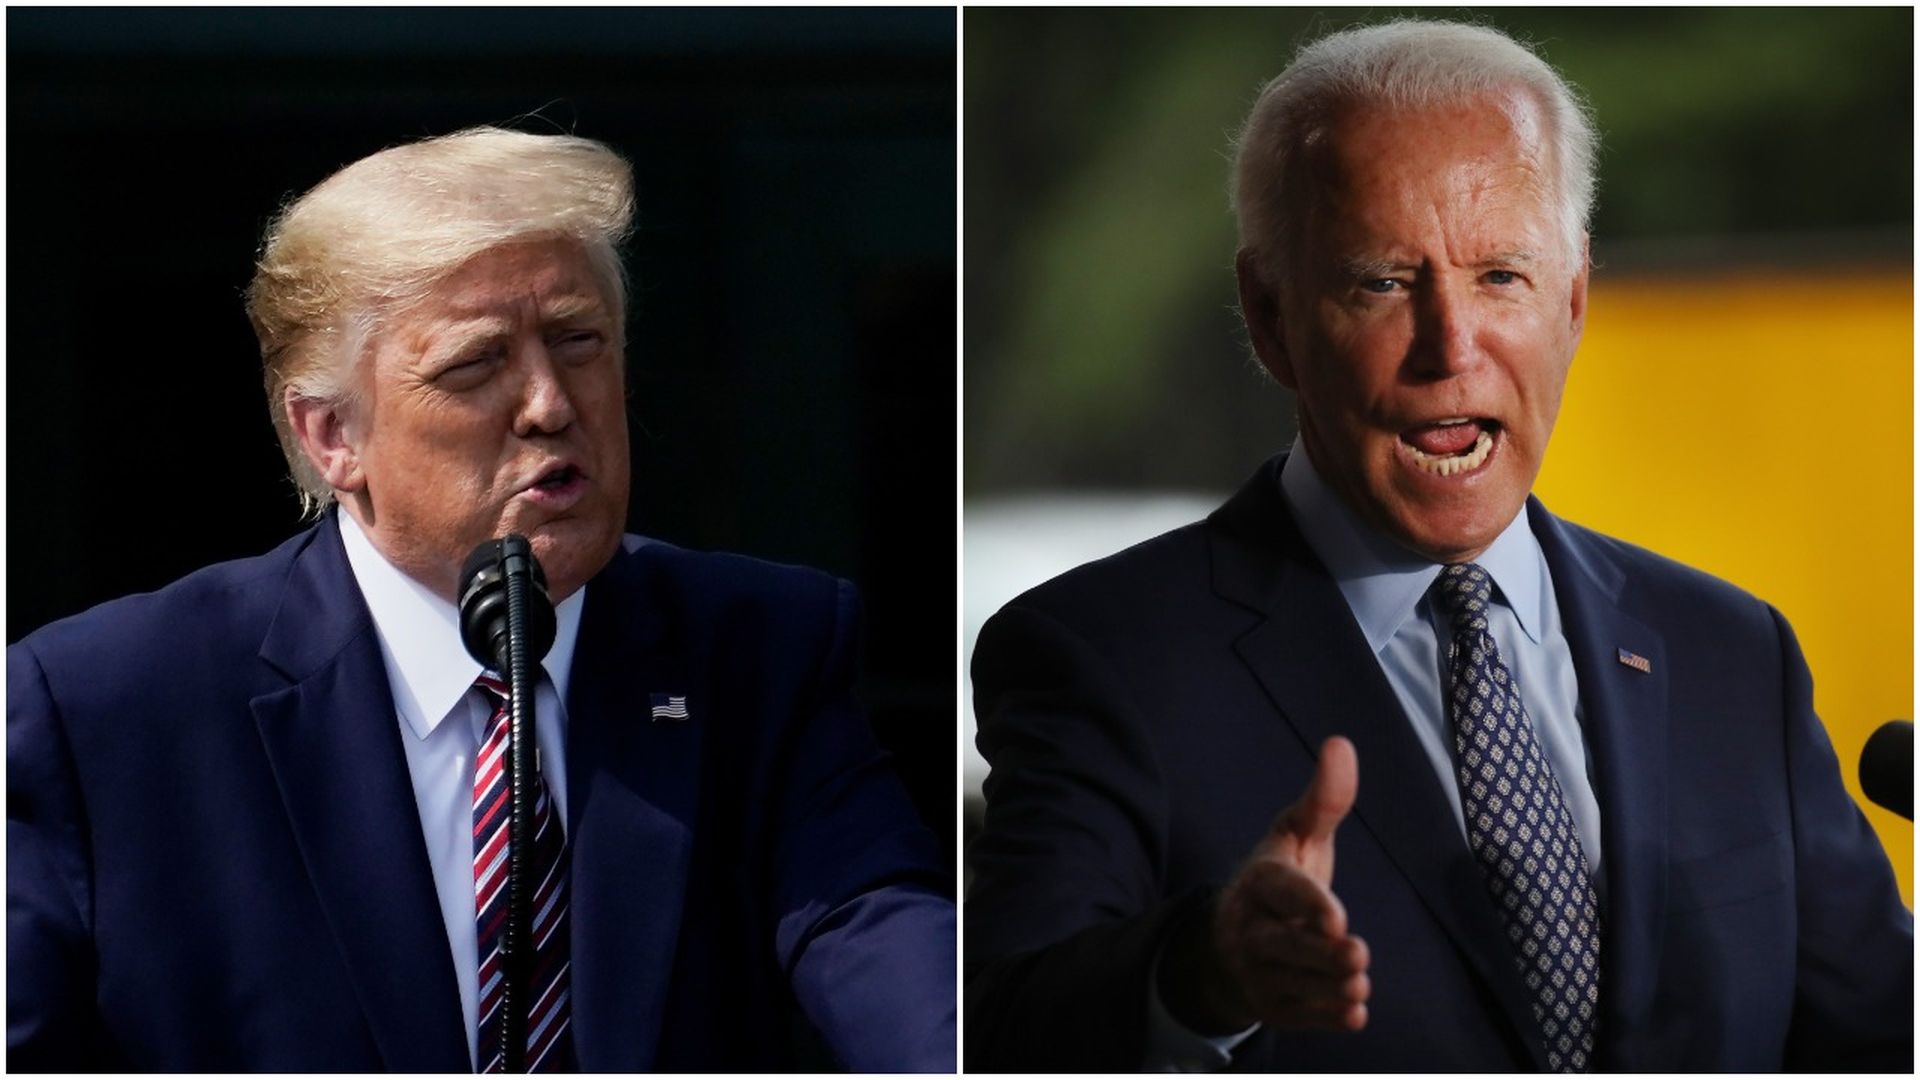 A combination photo of President Trump and Joe Biden